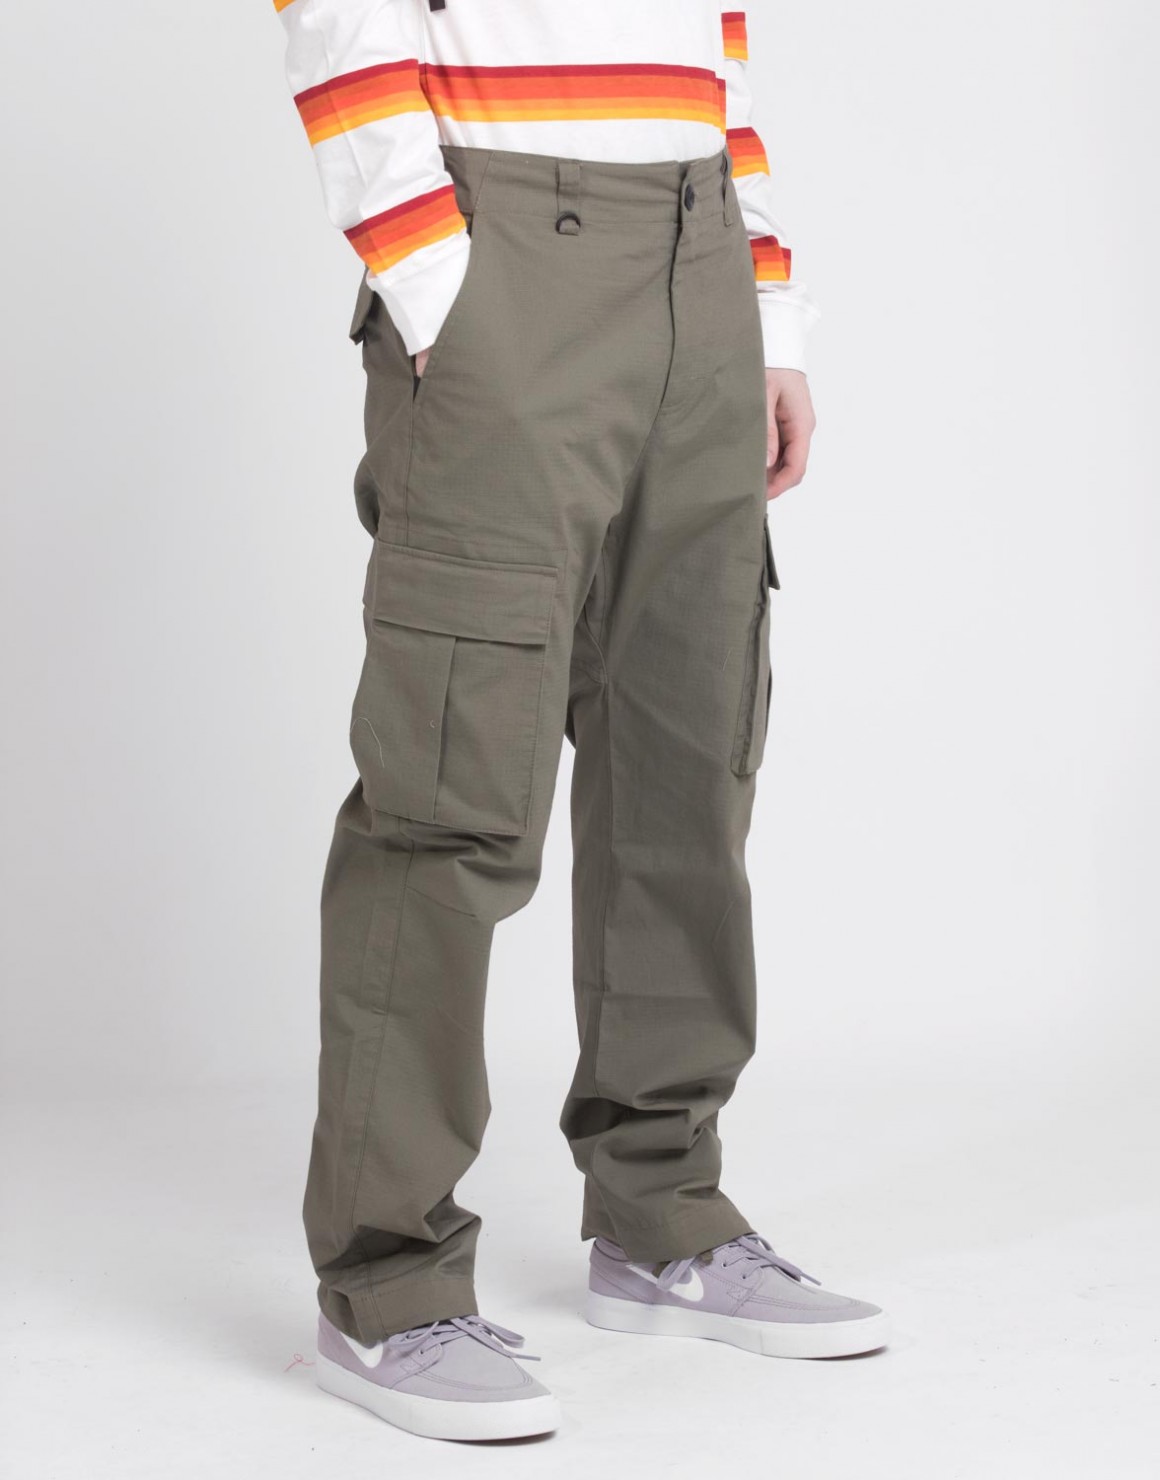 Nike SB FLex Cargo Pant